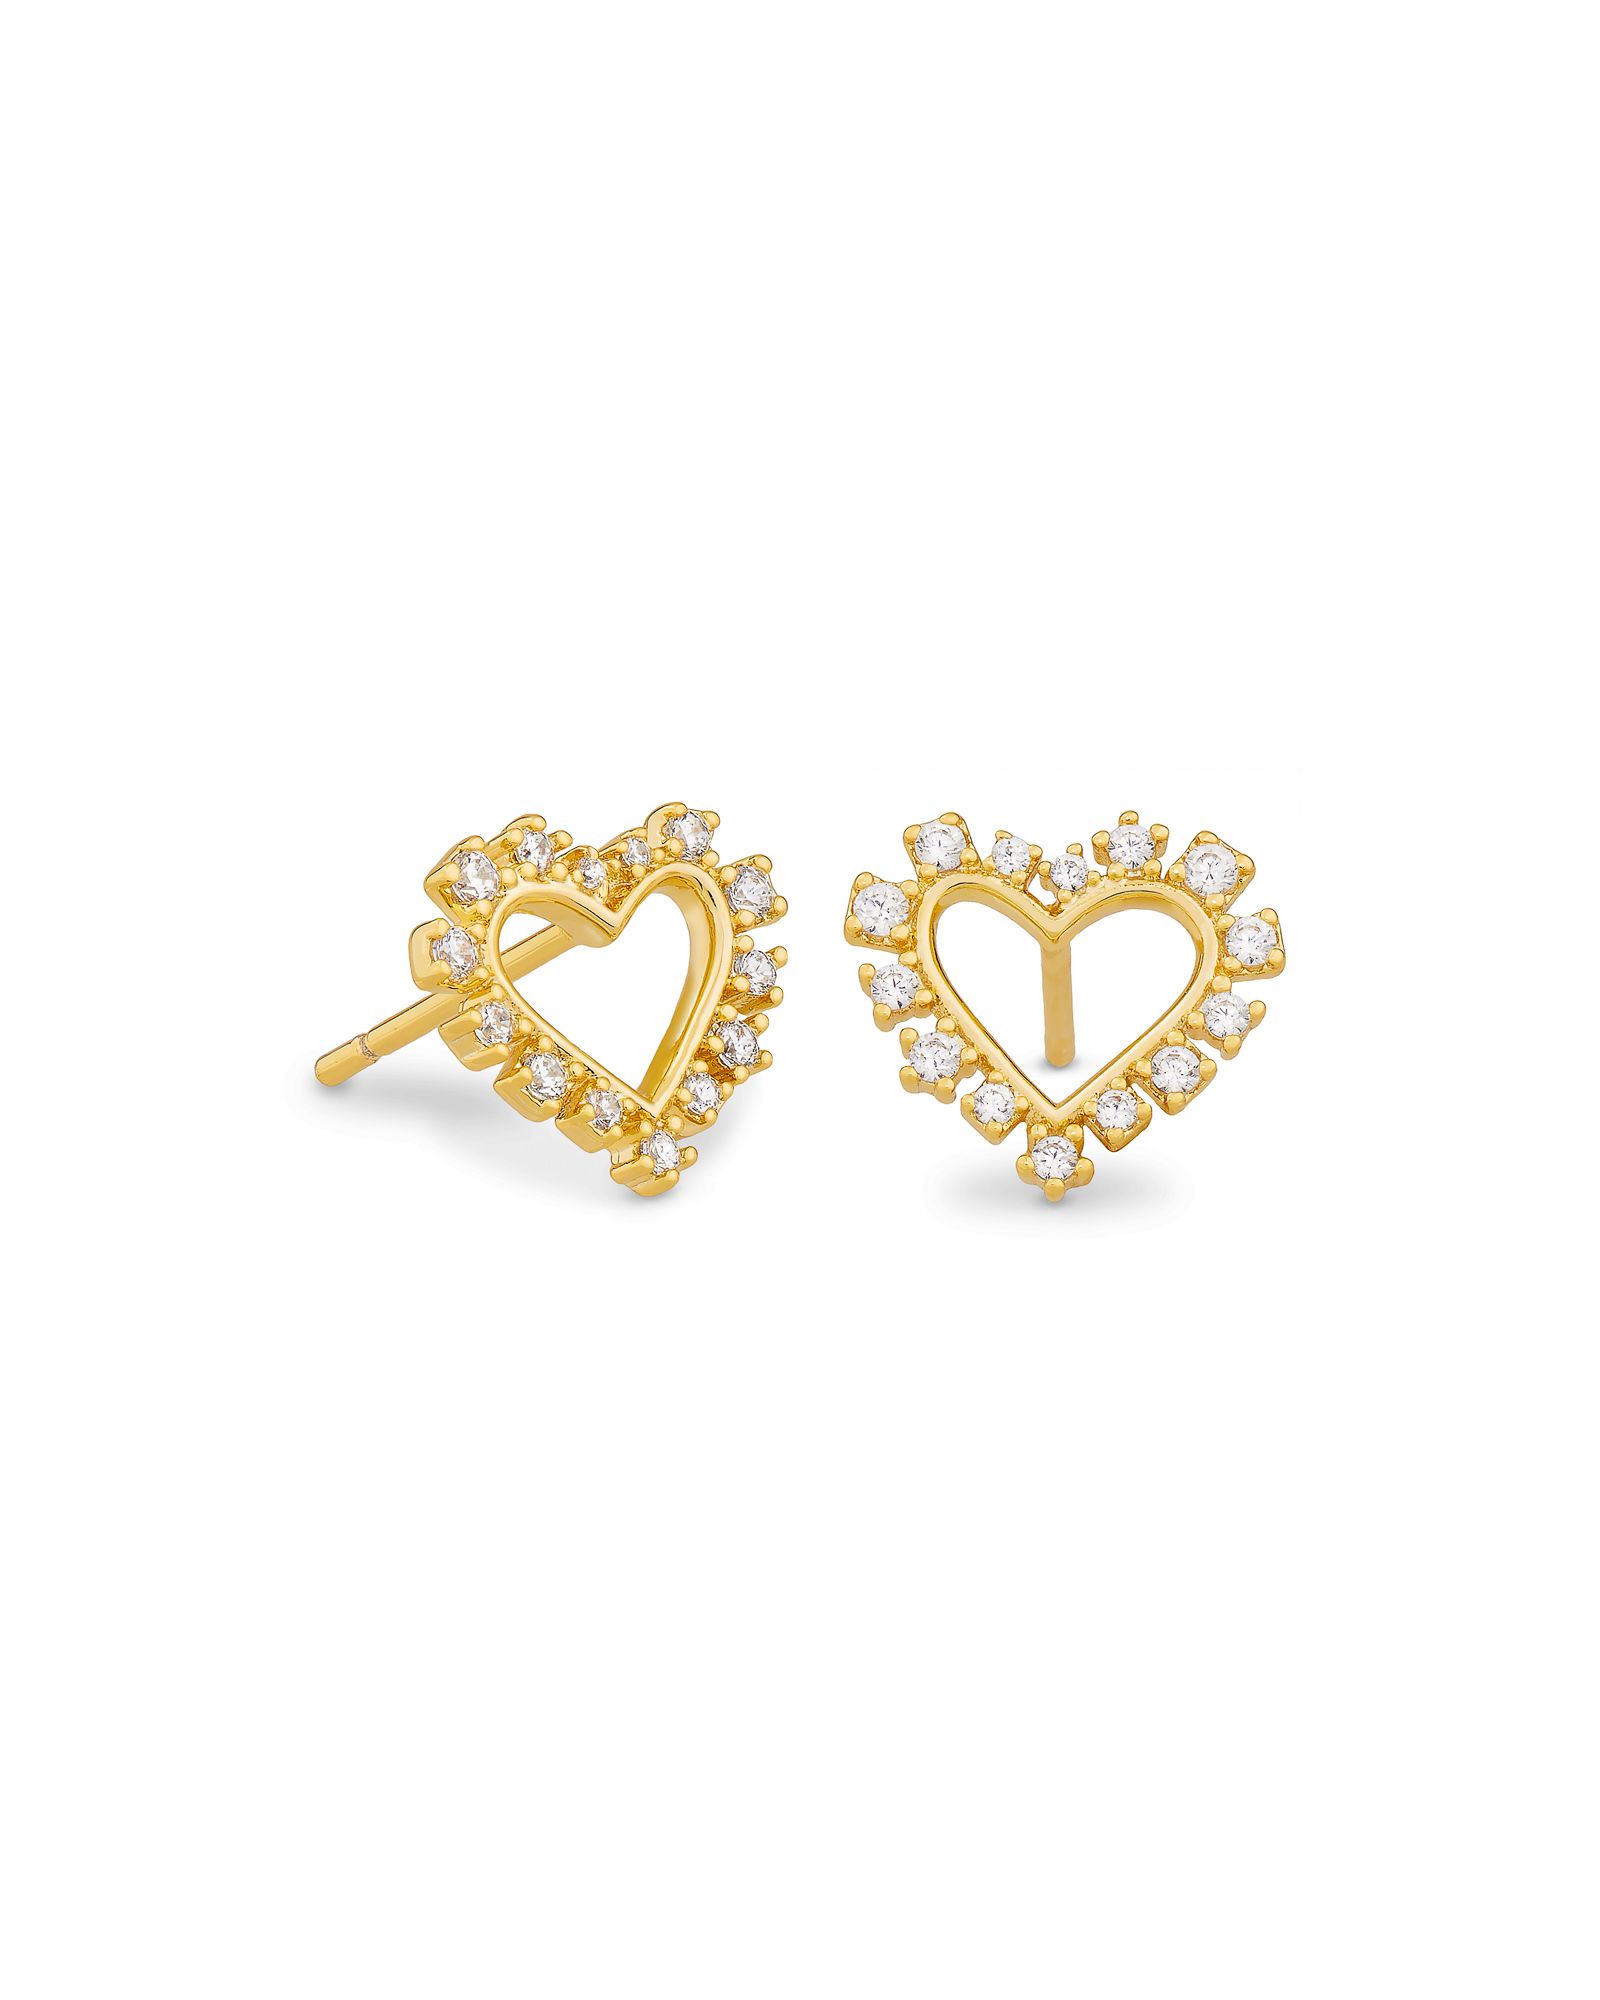 Ari Heart Gold Stud Earrings in White Crystal | Kendra Scott